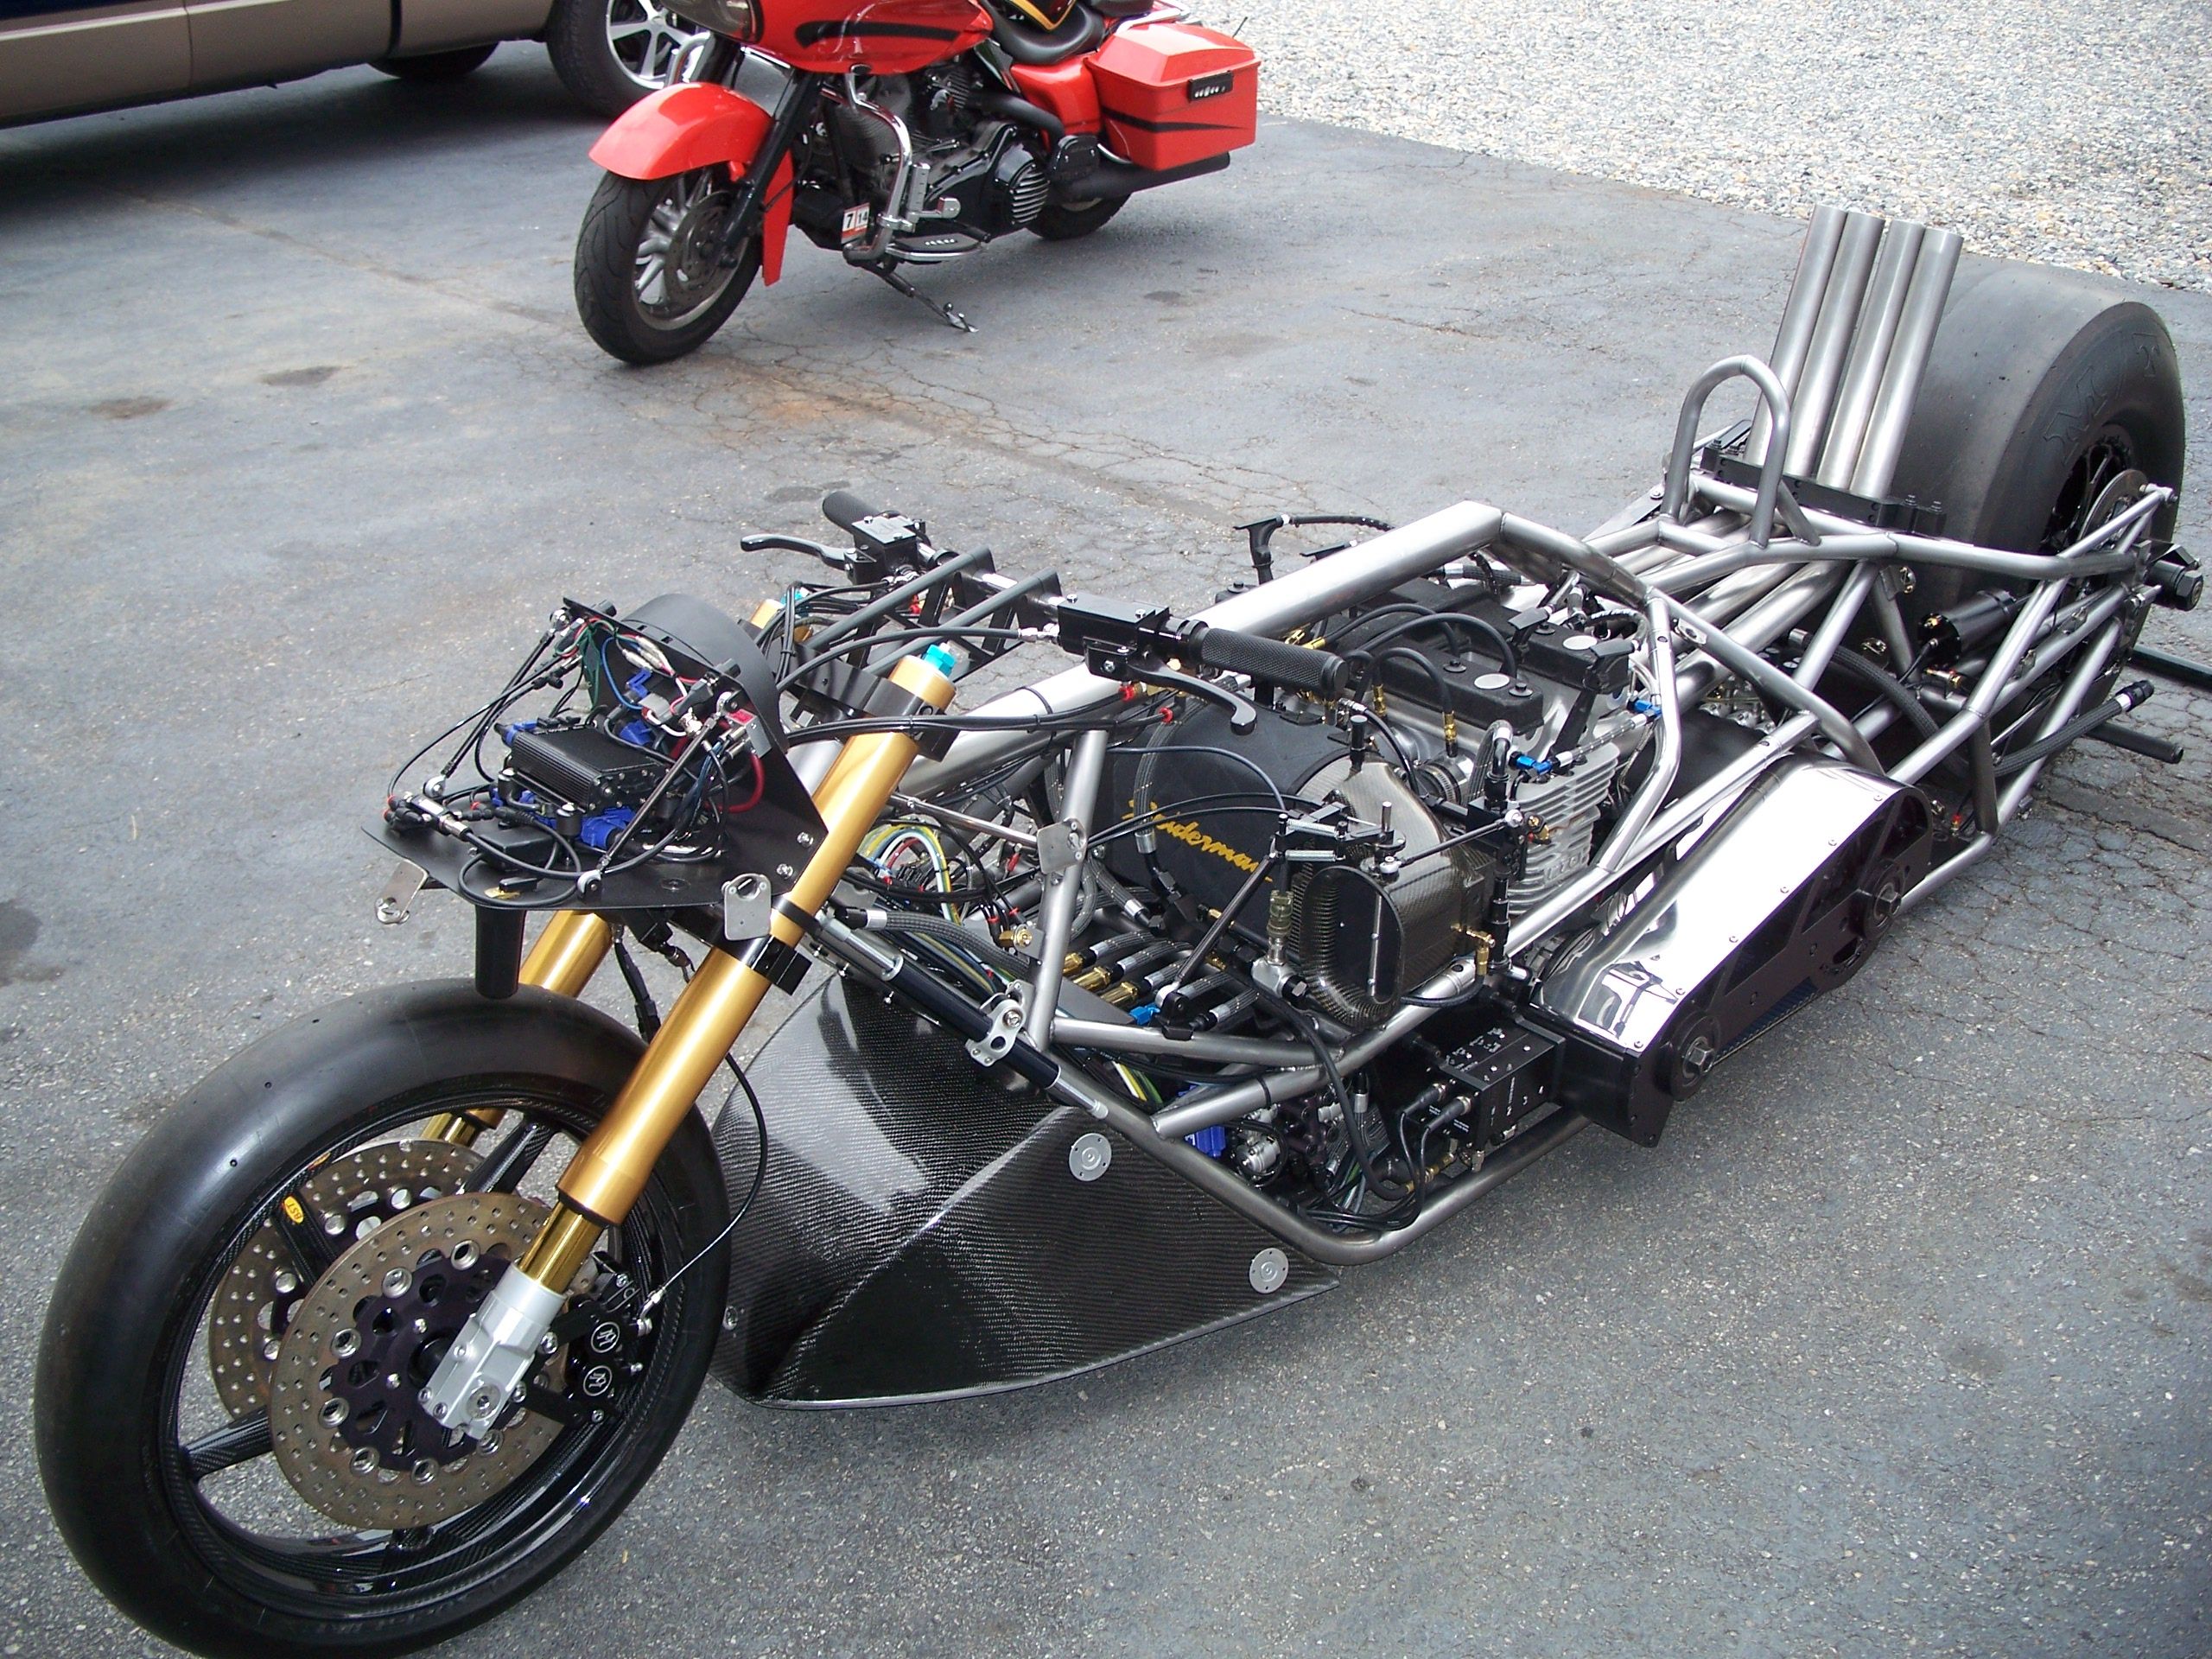 Larry ‘Spiderman’ McBride’s Top Fuel bike's chassis